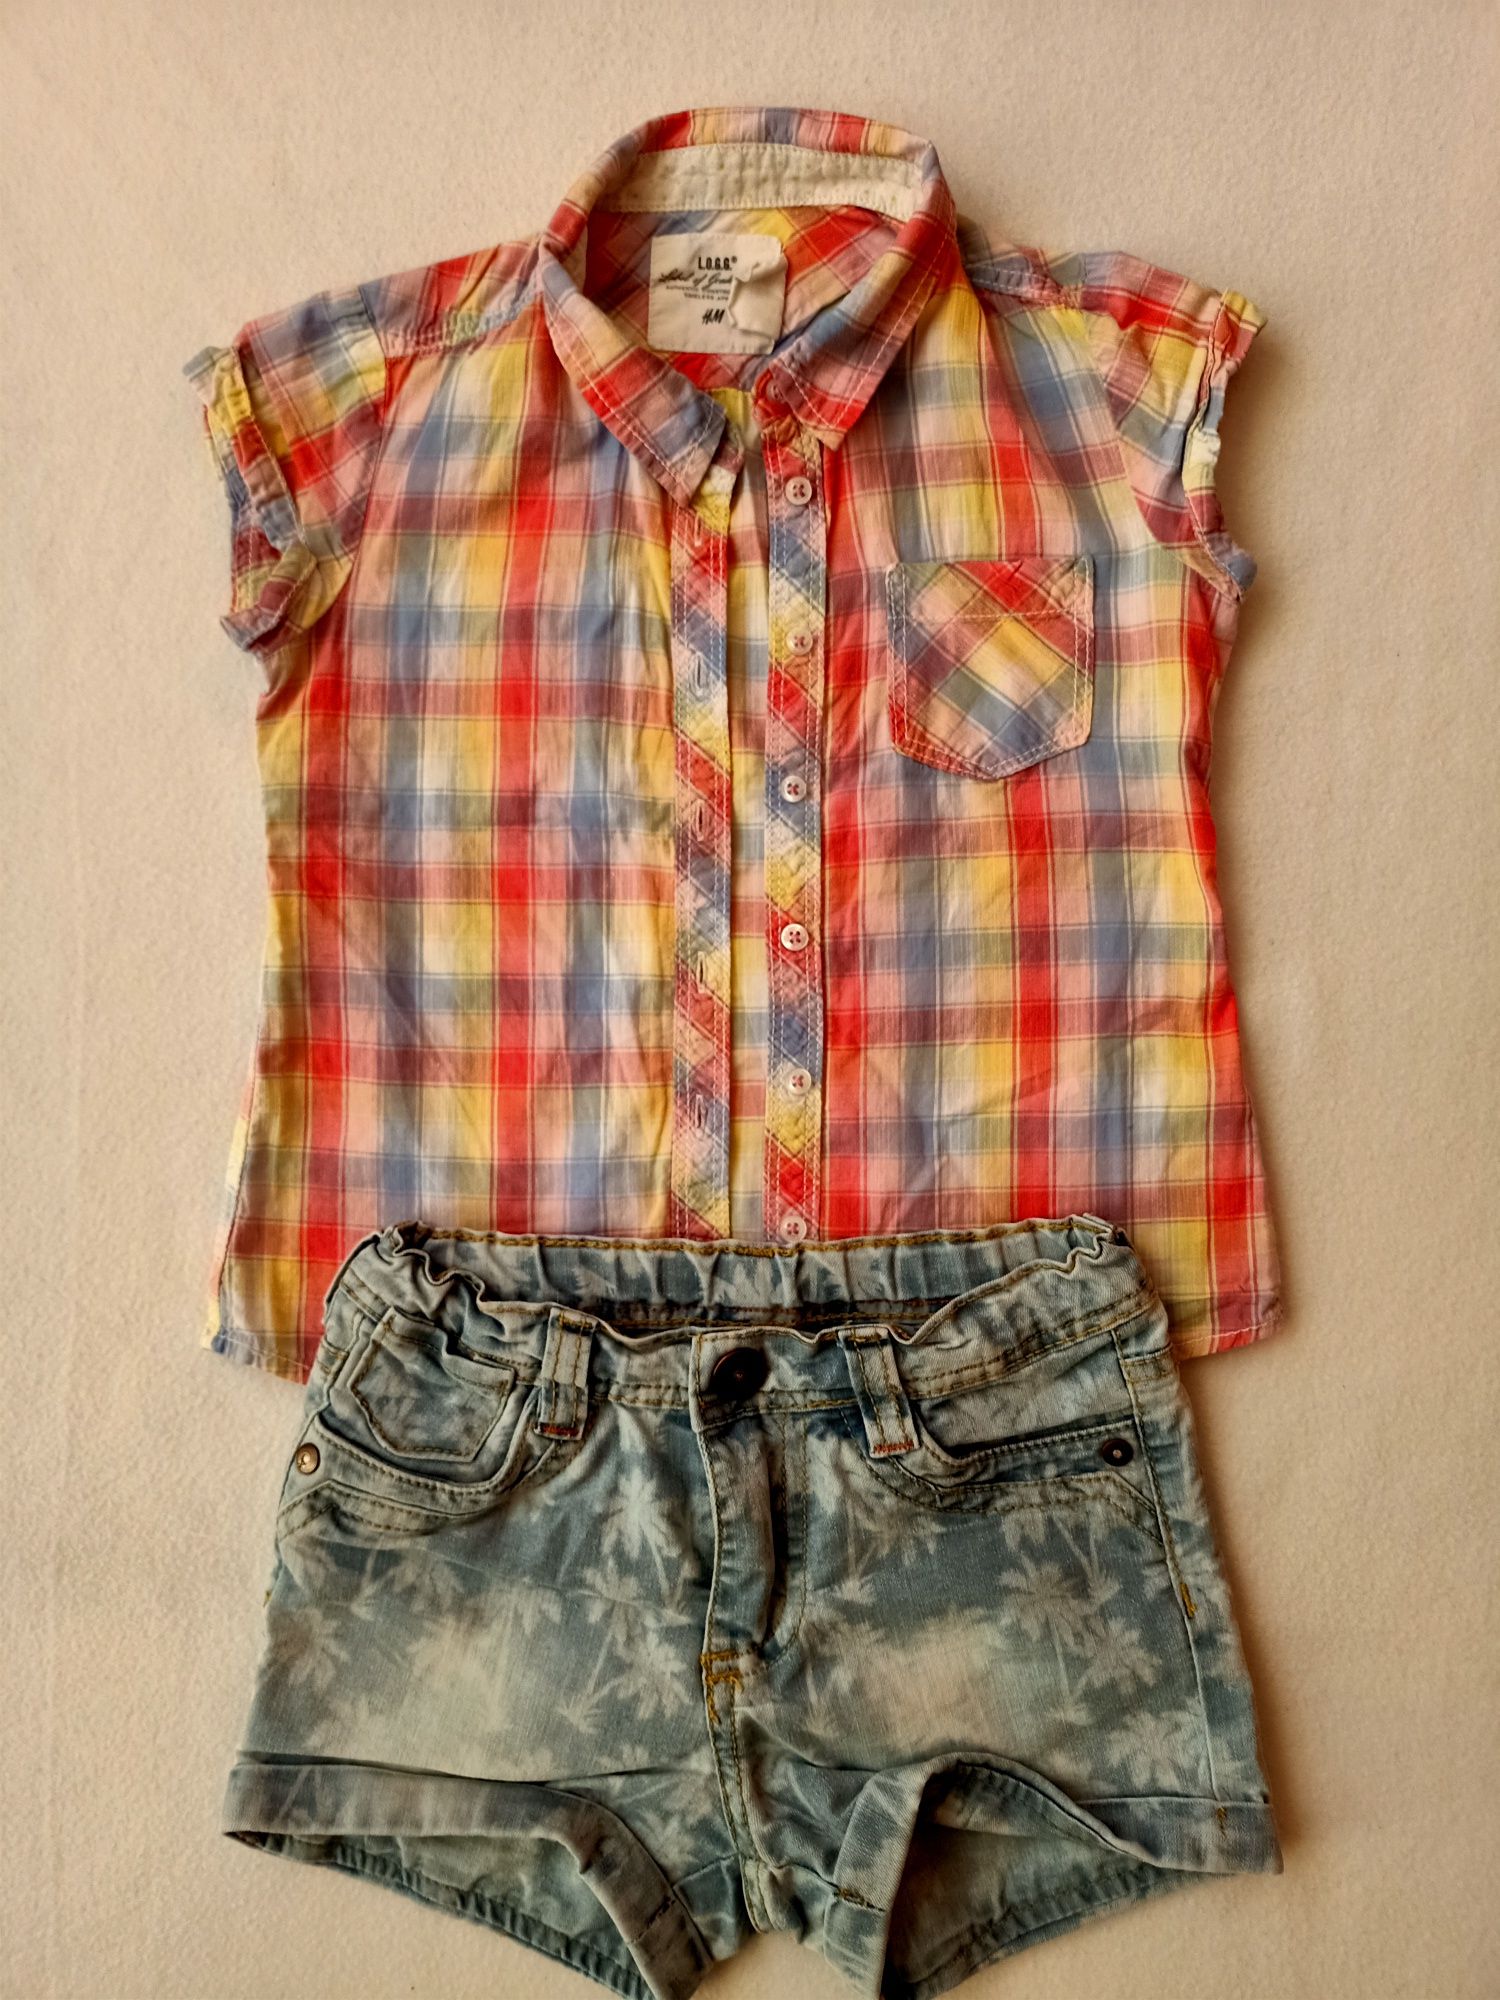 PAKA letnie zestawy/ komplety, 110 cm, bluzki, spodenki H&M Cool Club